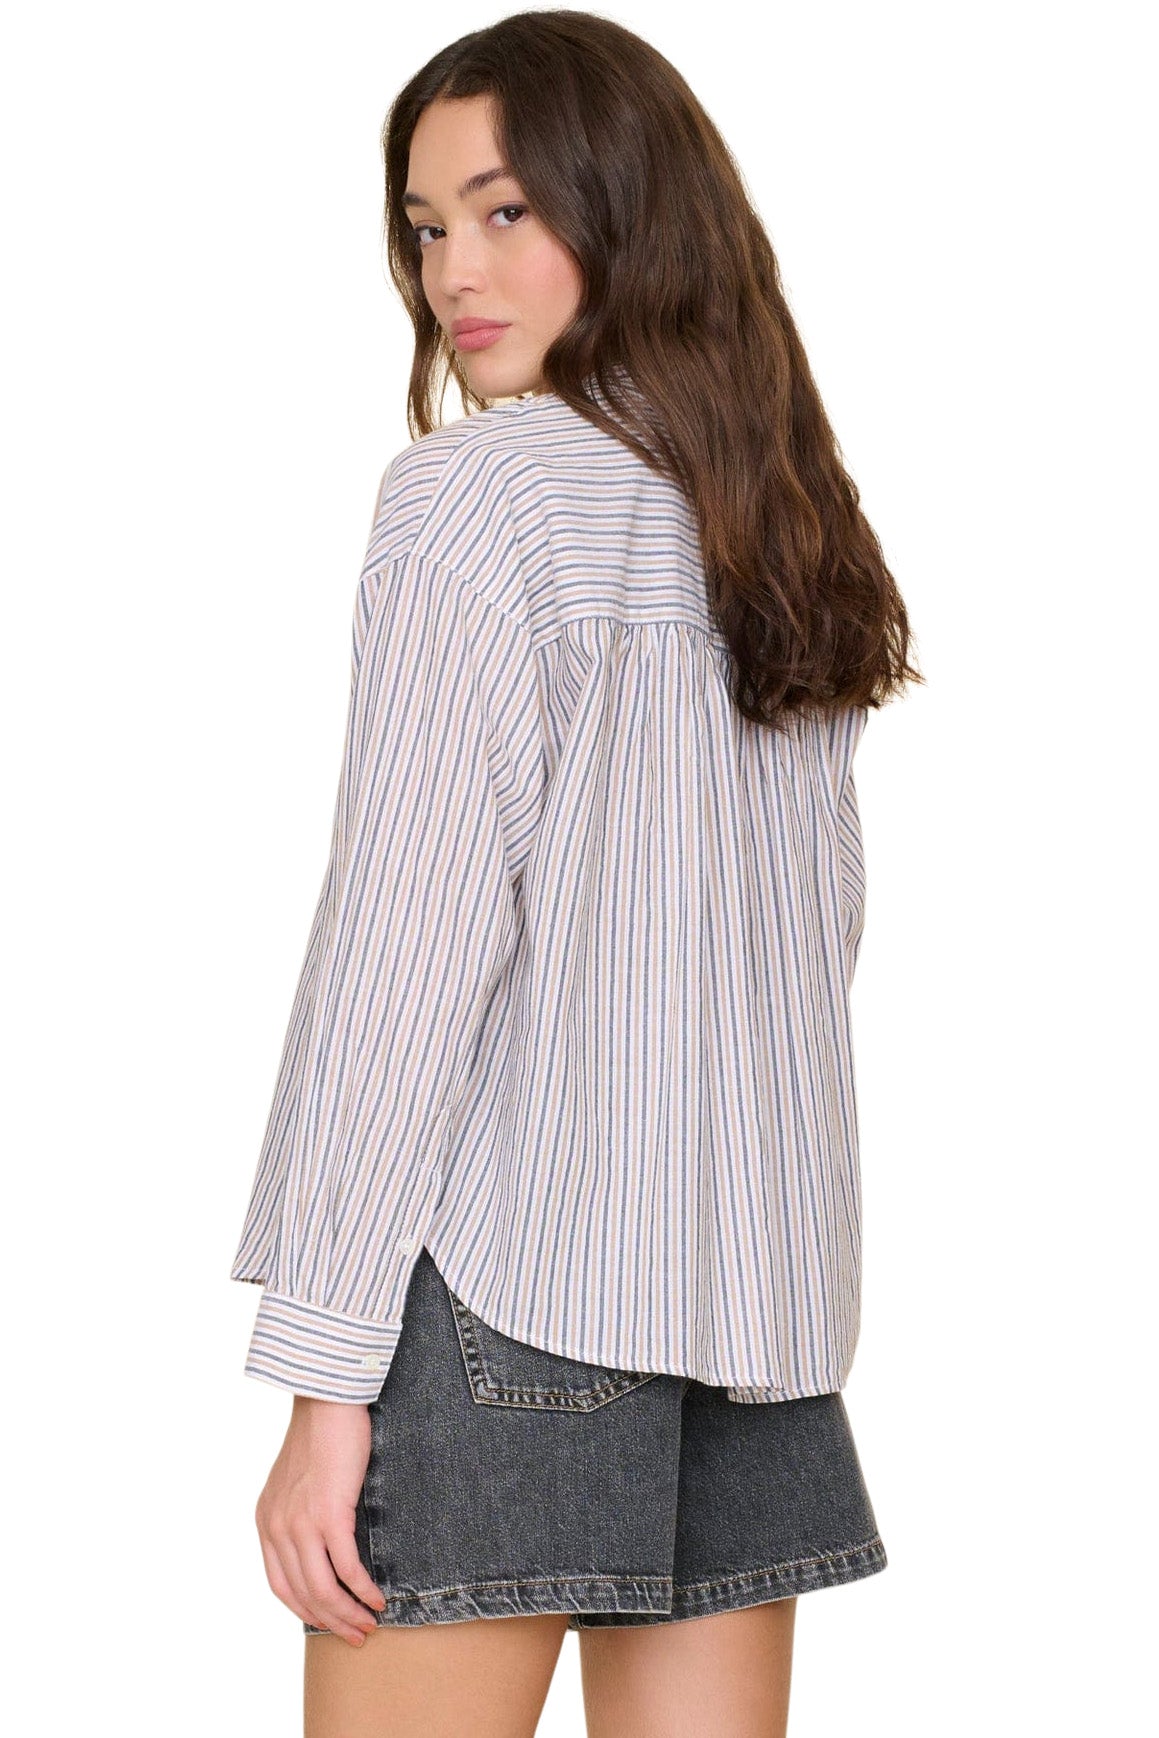 Xirena Jones Shirt in Mocha Stripe